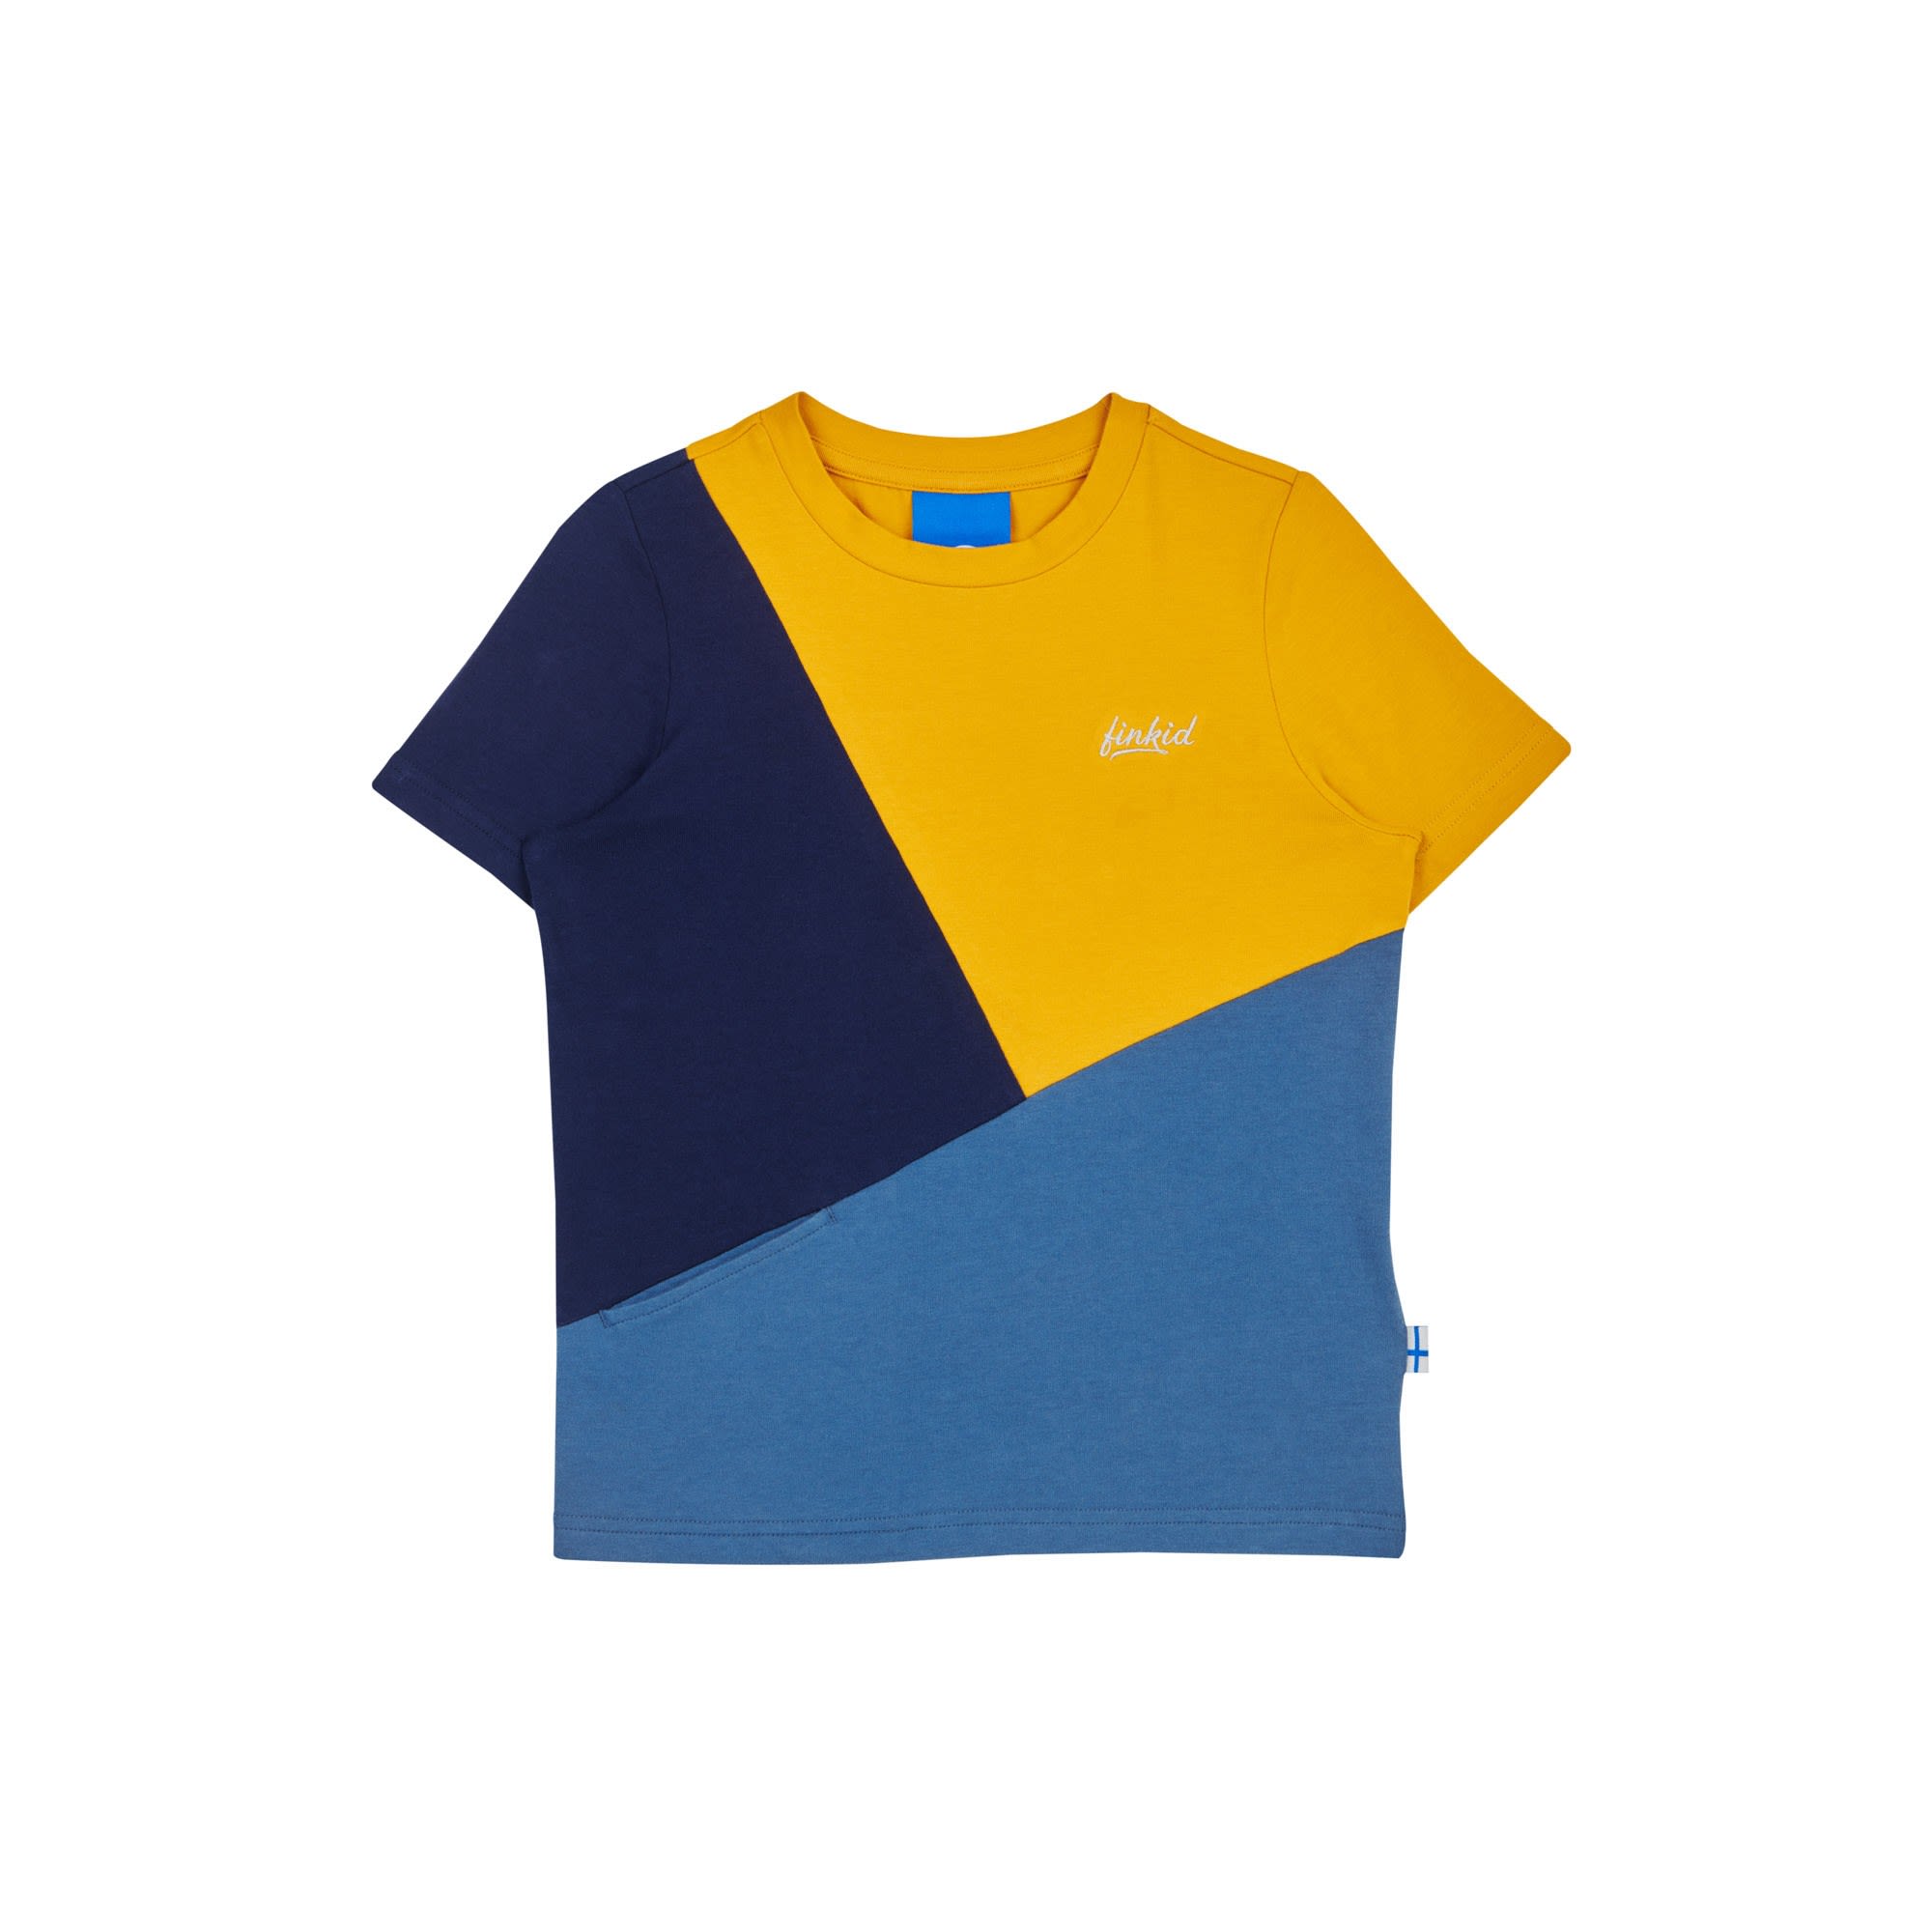 Finkid Ankkuri Colorblock - Blau - Gelb- Kurzarm-Shirts- Grsse 80 - 90 - Farbe Golden Yellow - Real Teal unter Finkid